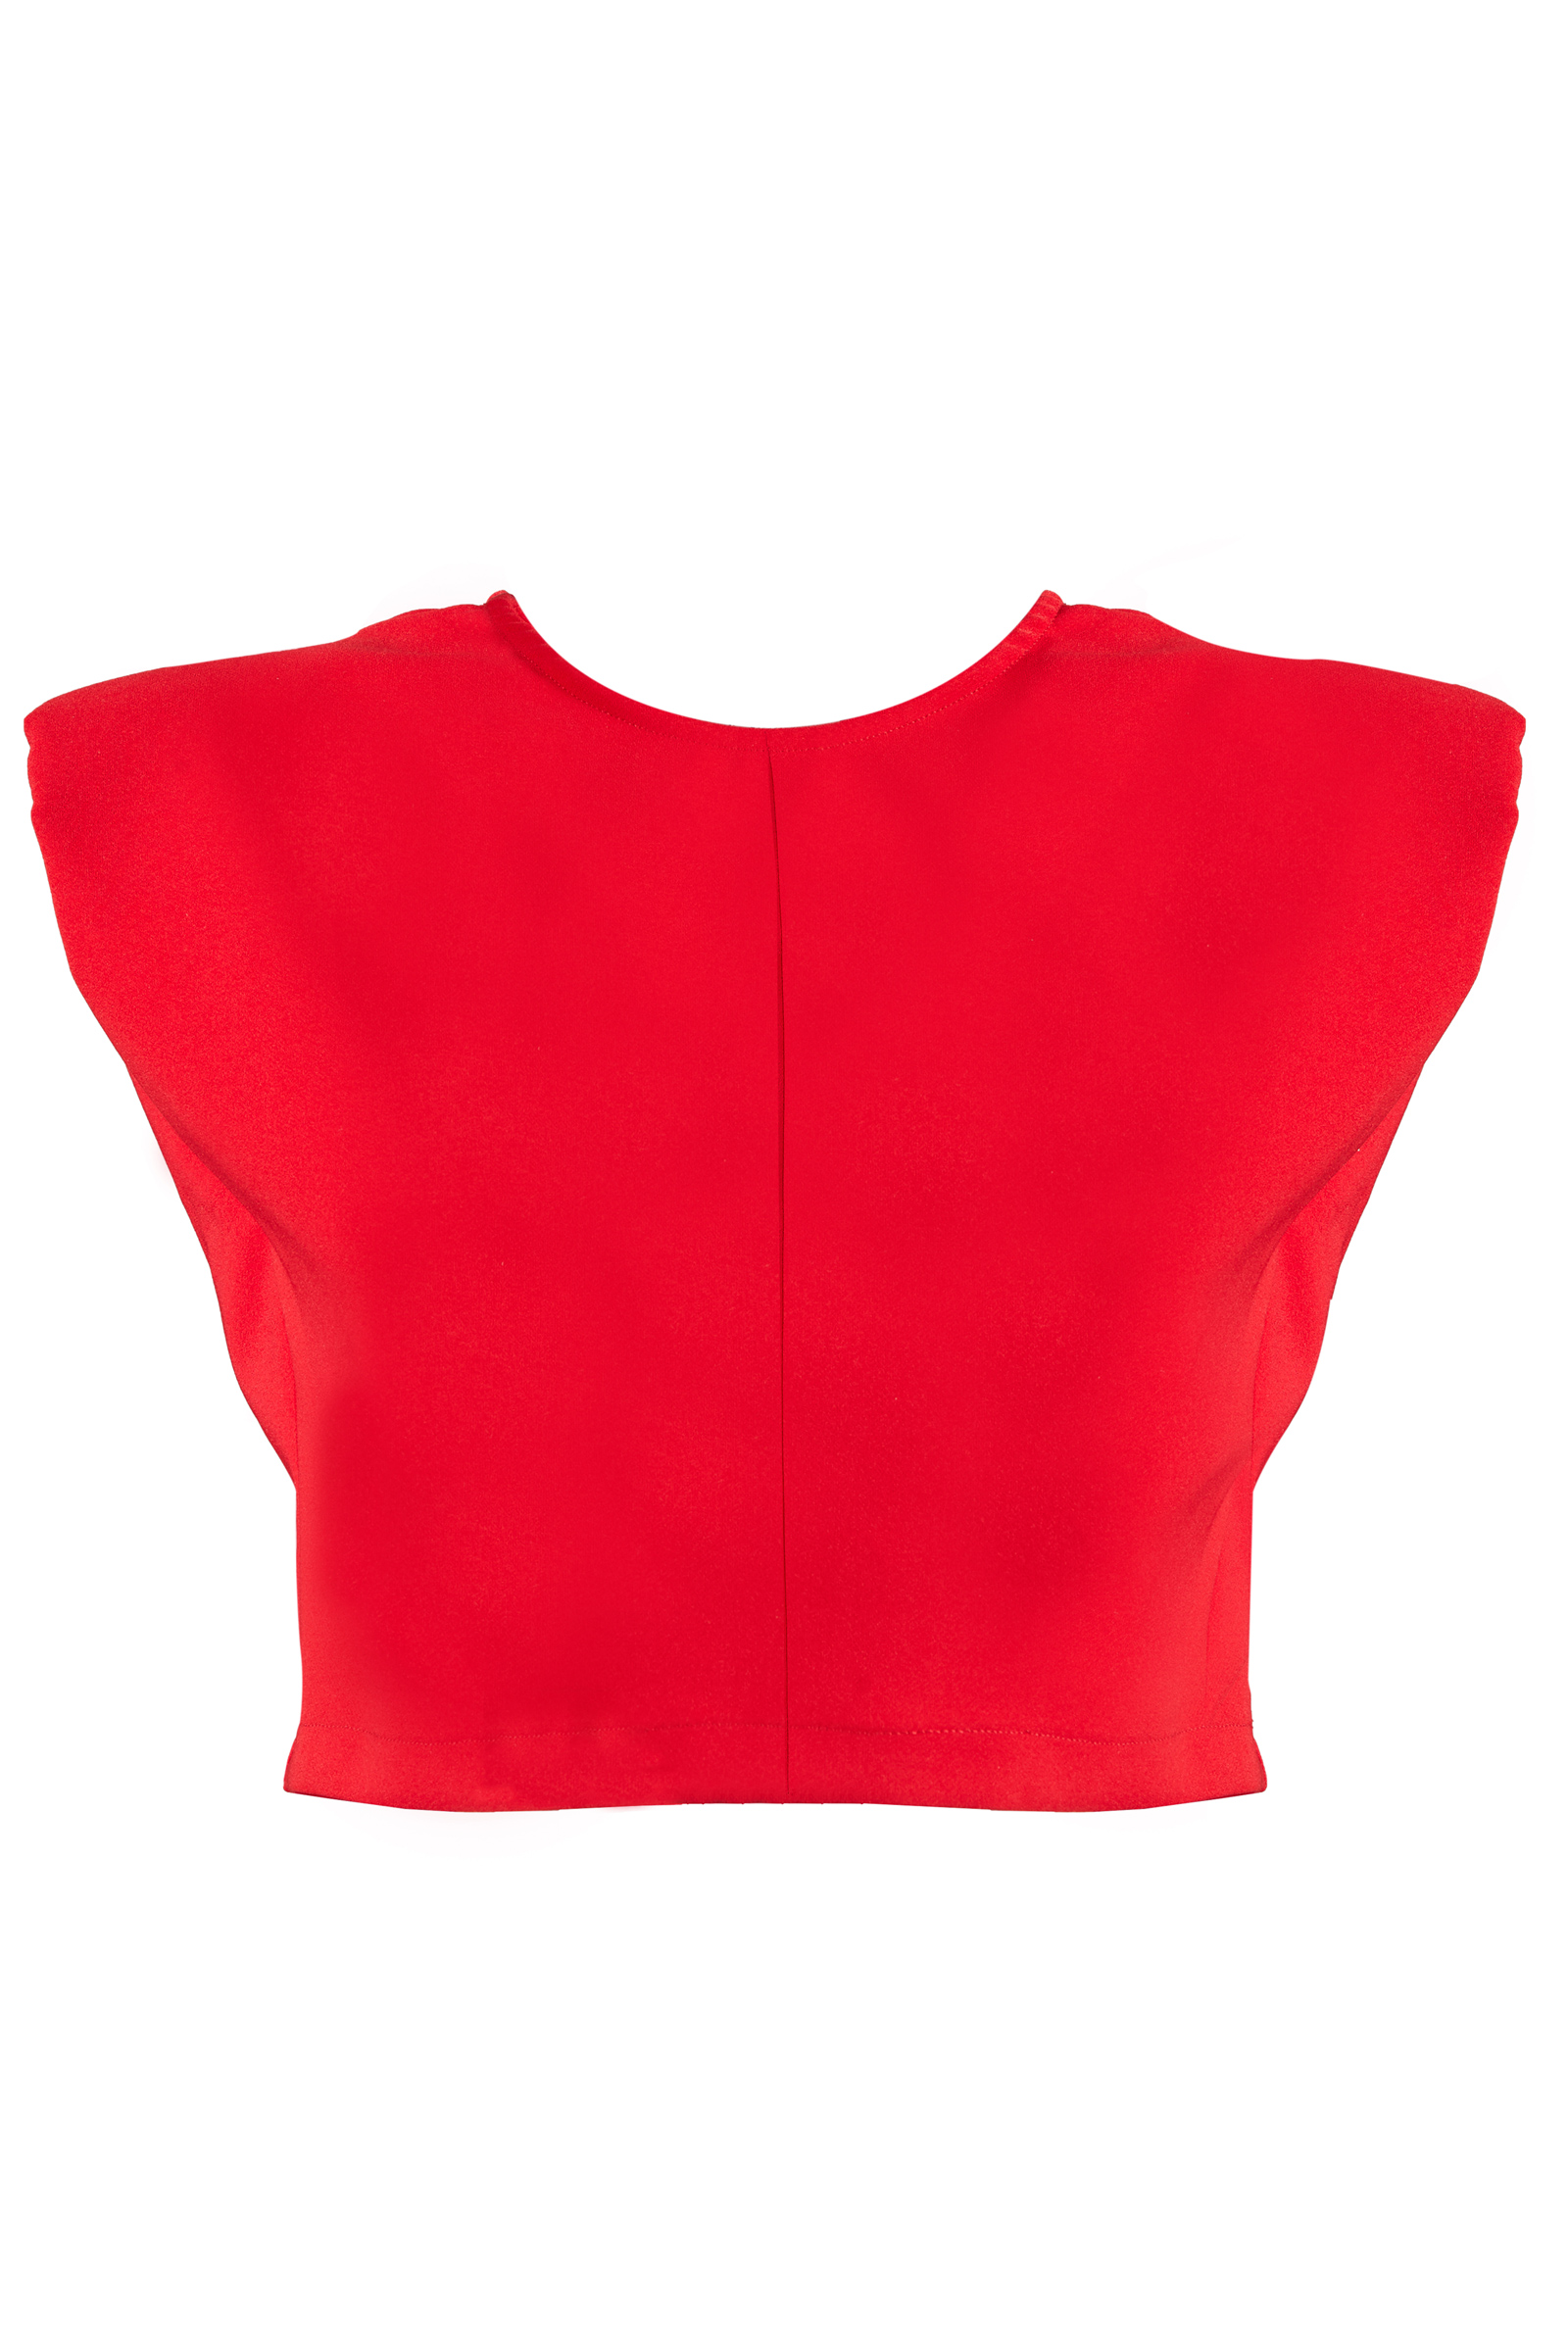 Red crepe sleeveless crop top